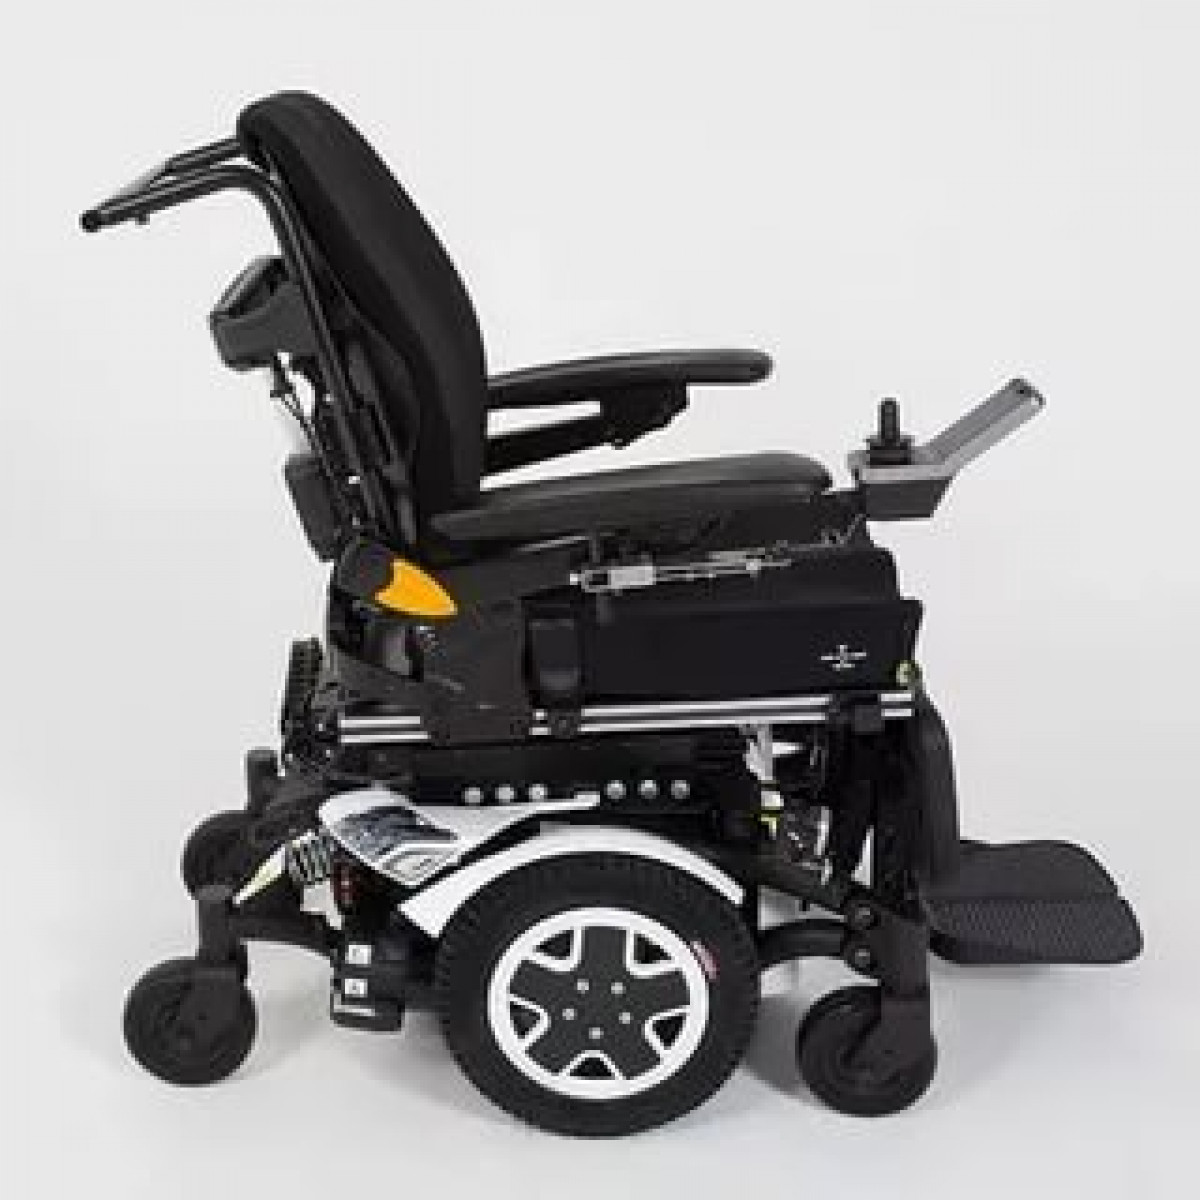 кресло коляска с электроприводом tdx invacare